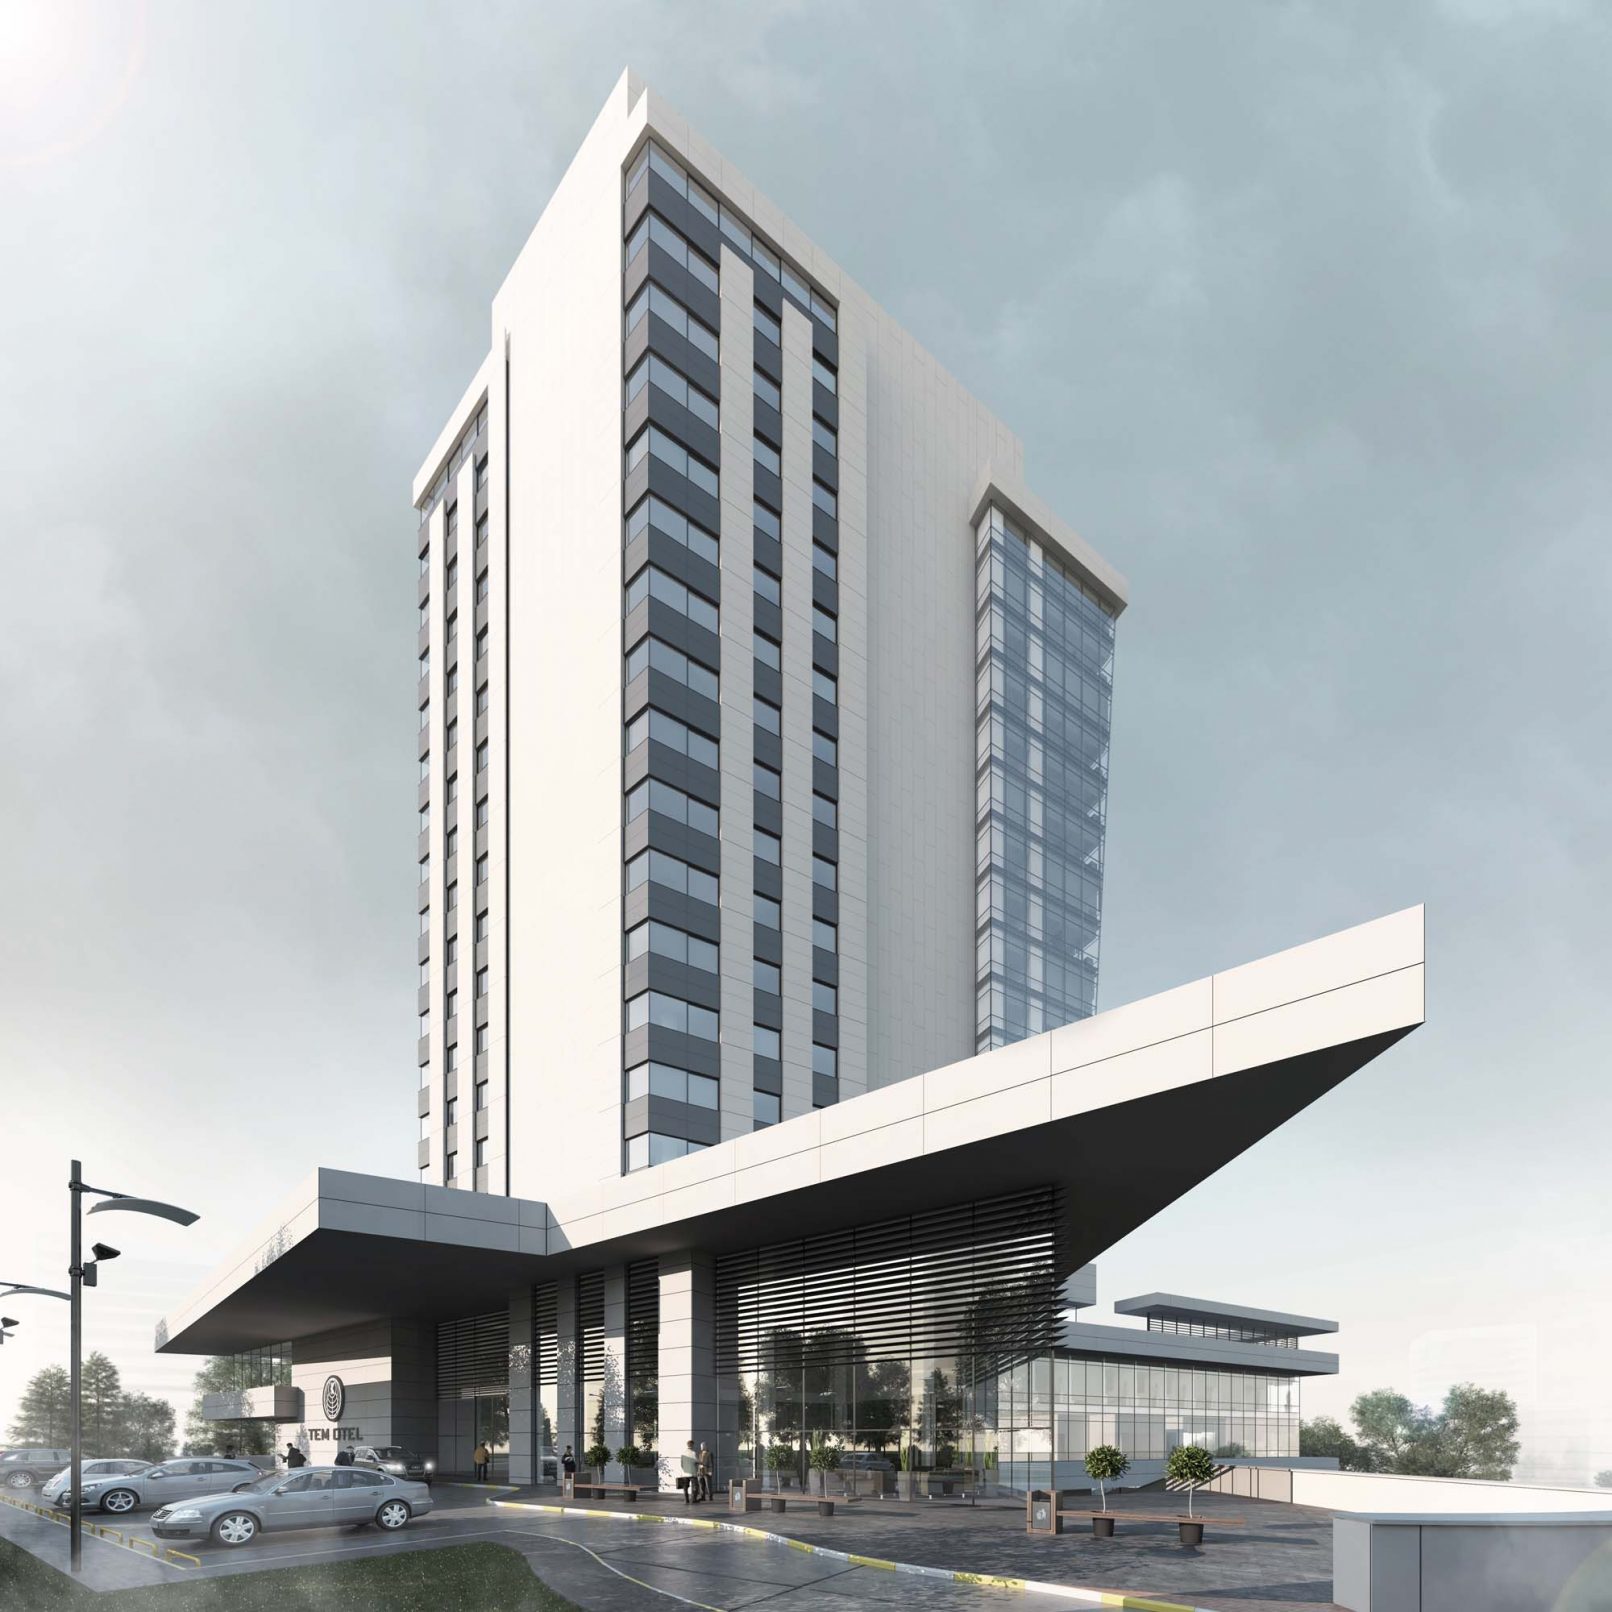 Artaş İnşaat Tem II Otel Mimarlık projesi mimari ofis